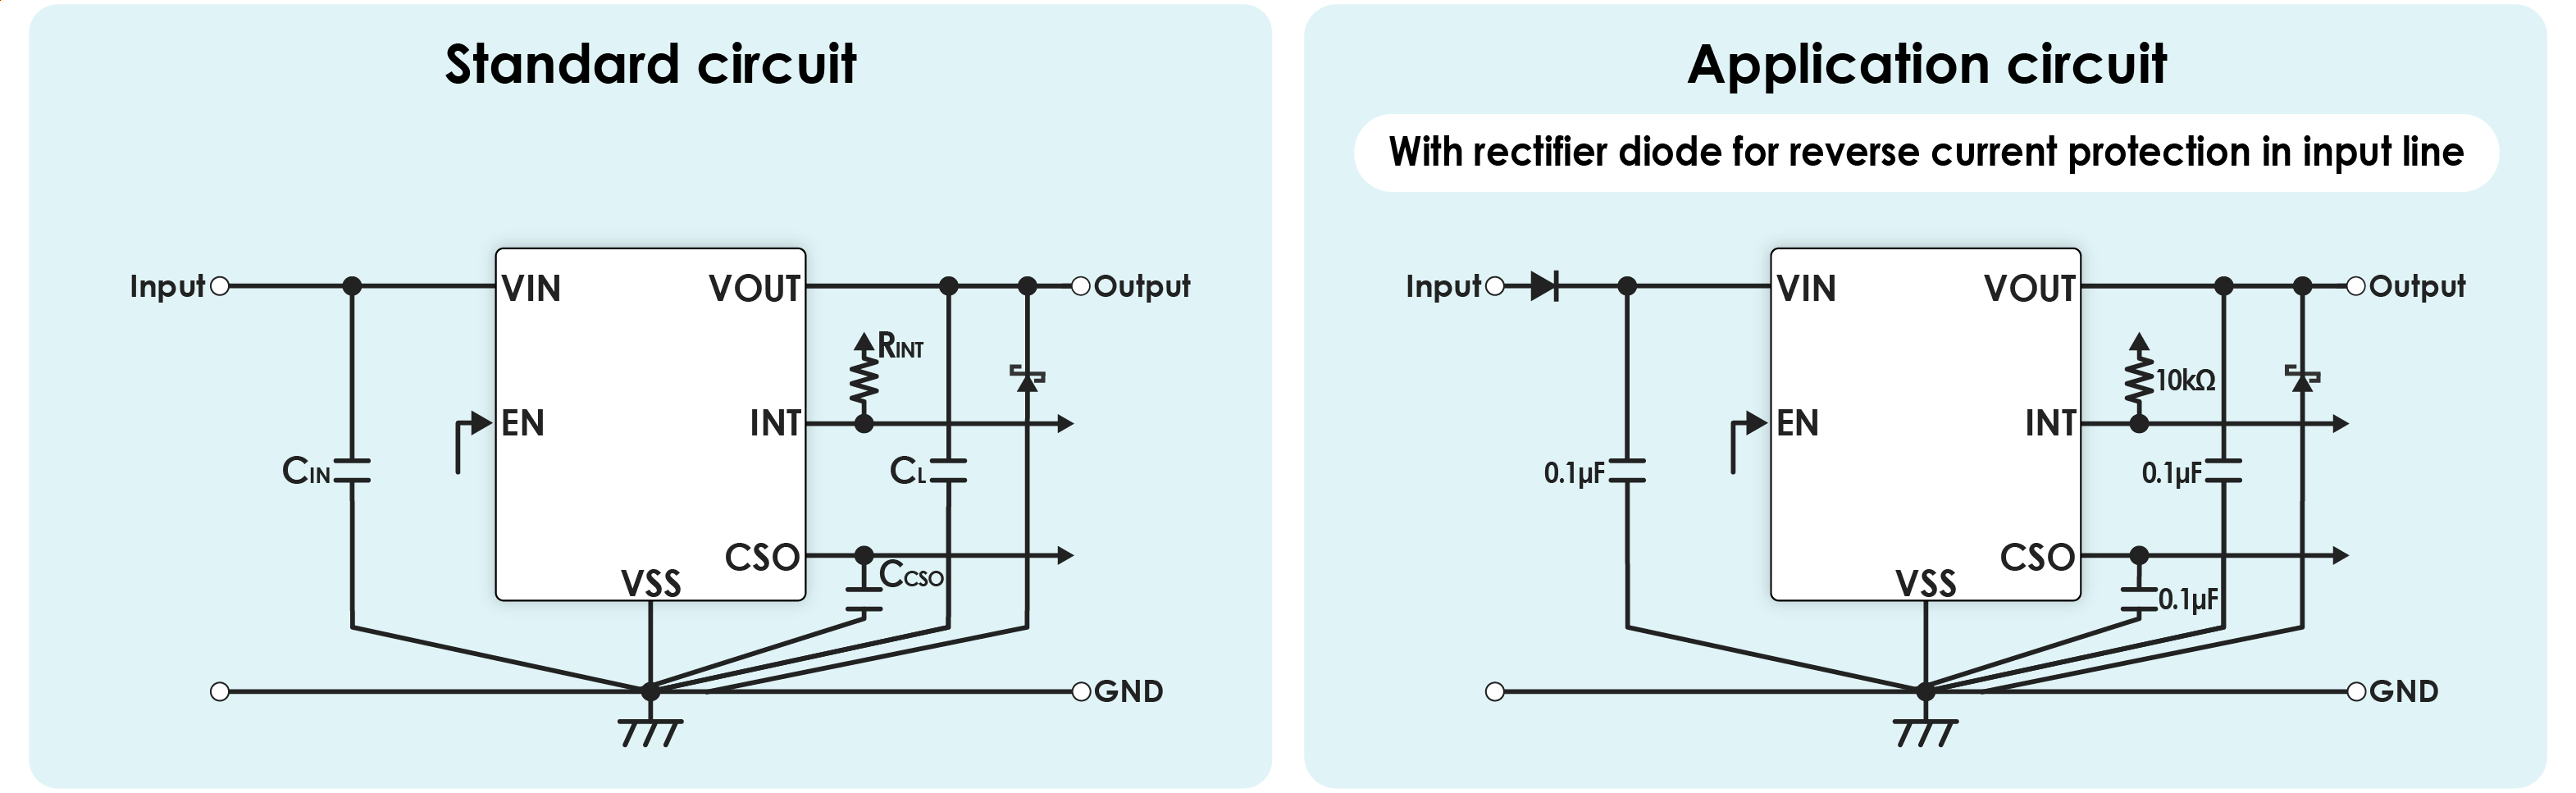 Circuit example of S-19682/19683 Series